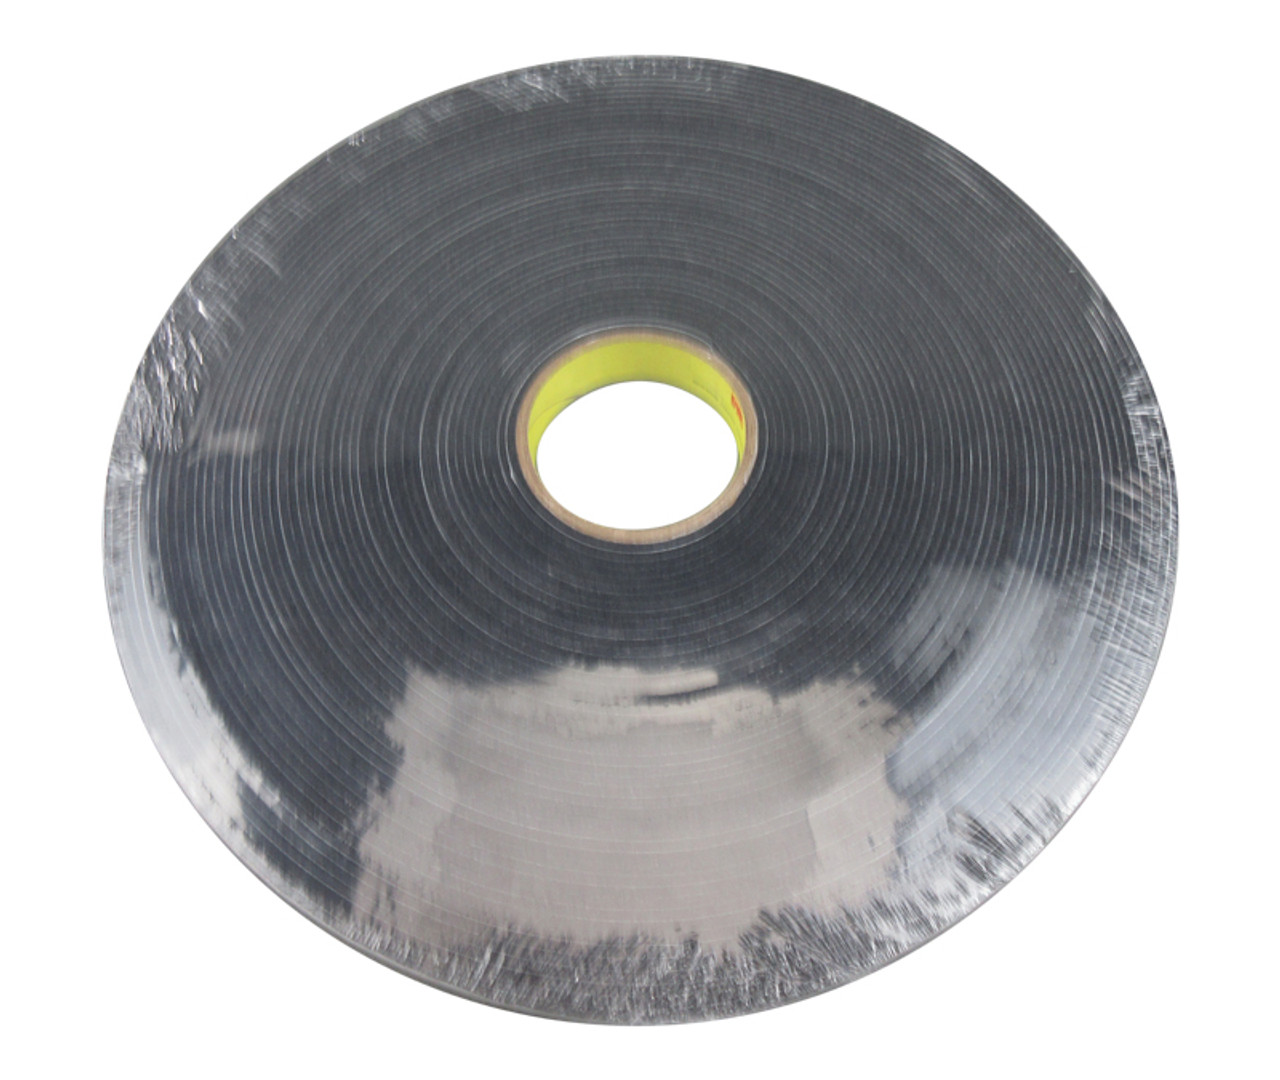 3M™ Vinyl Foam Tape 4516